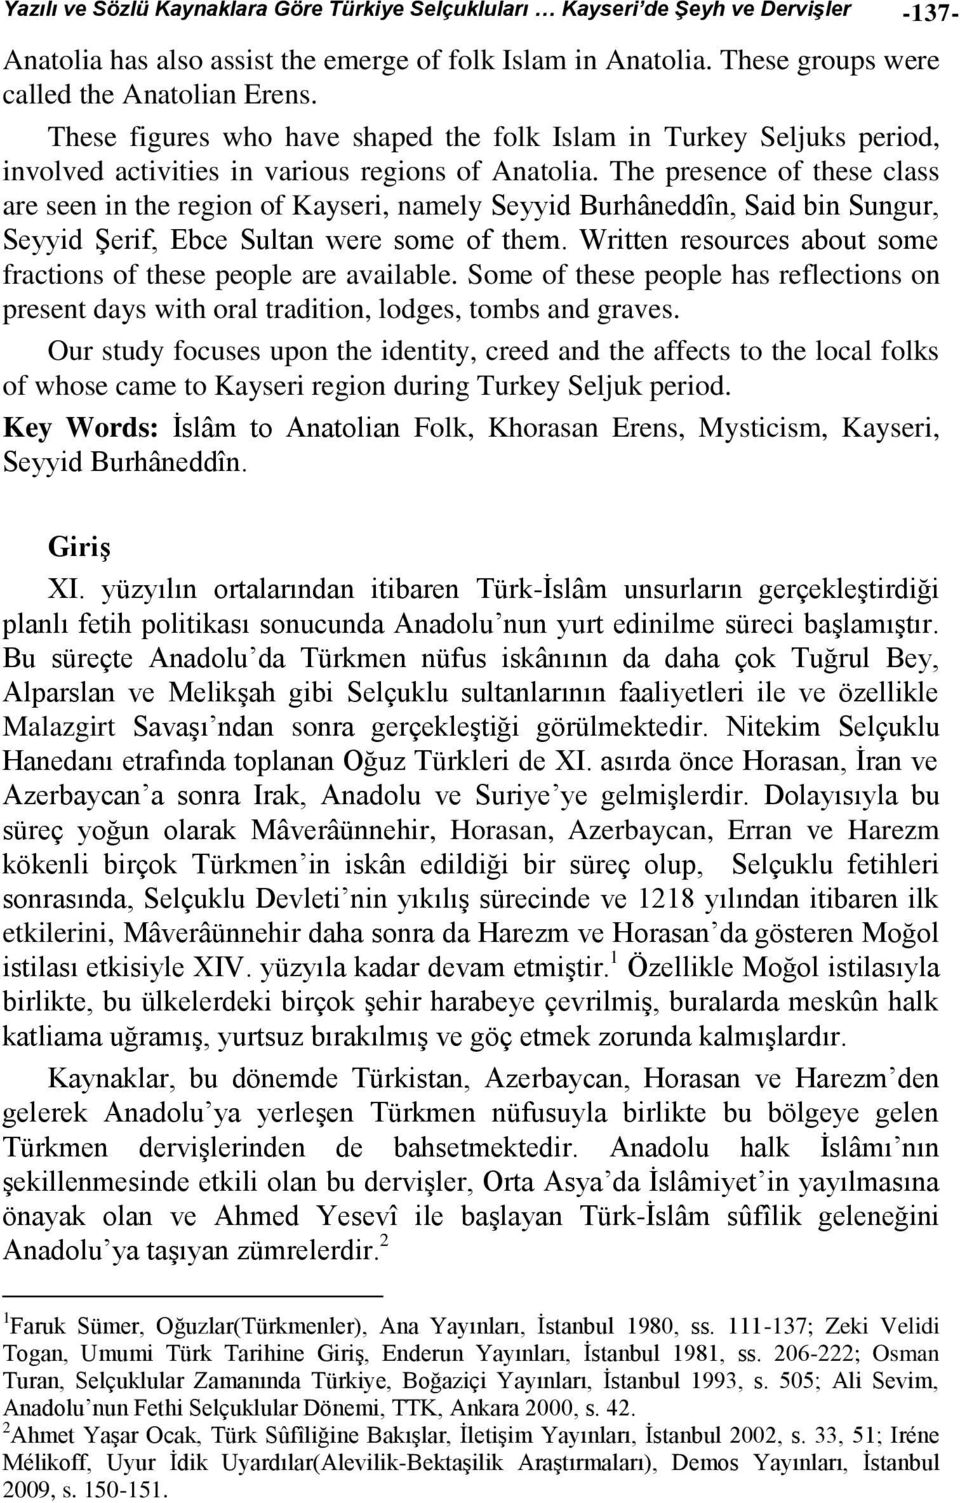 The presence of these class are seen in the region of Kayseri, namely Seyyid Burhâneddîn, Said bin Sungur, Seyyid Şerif, Ebce Sultan were some of them.